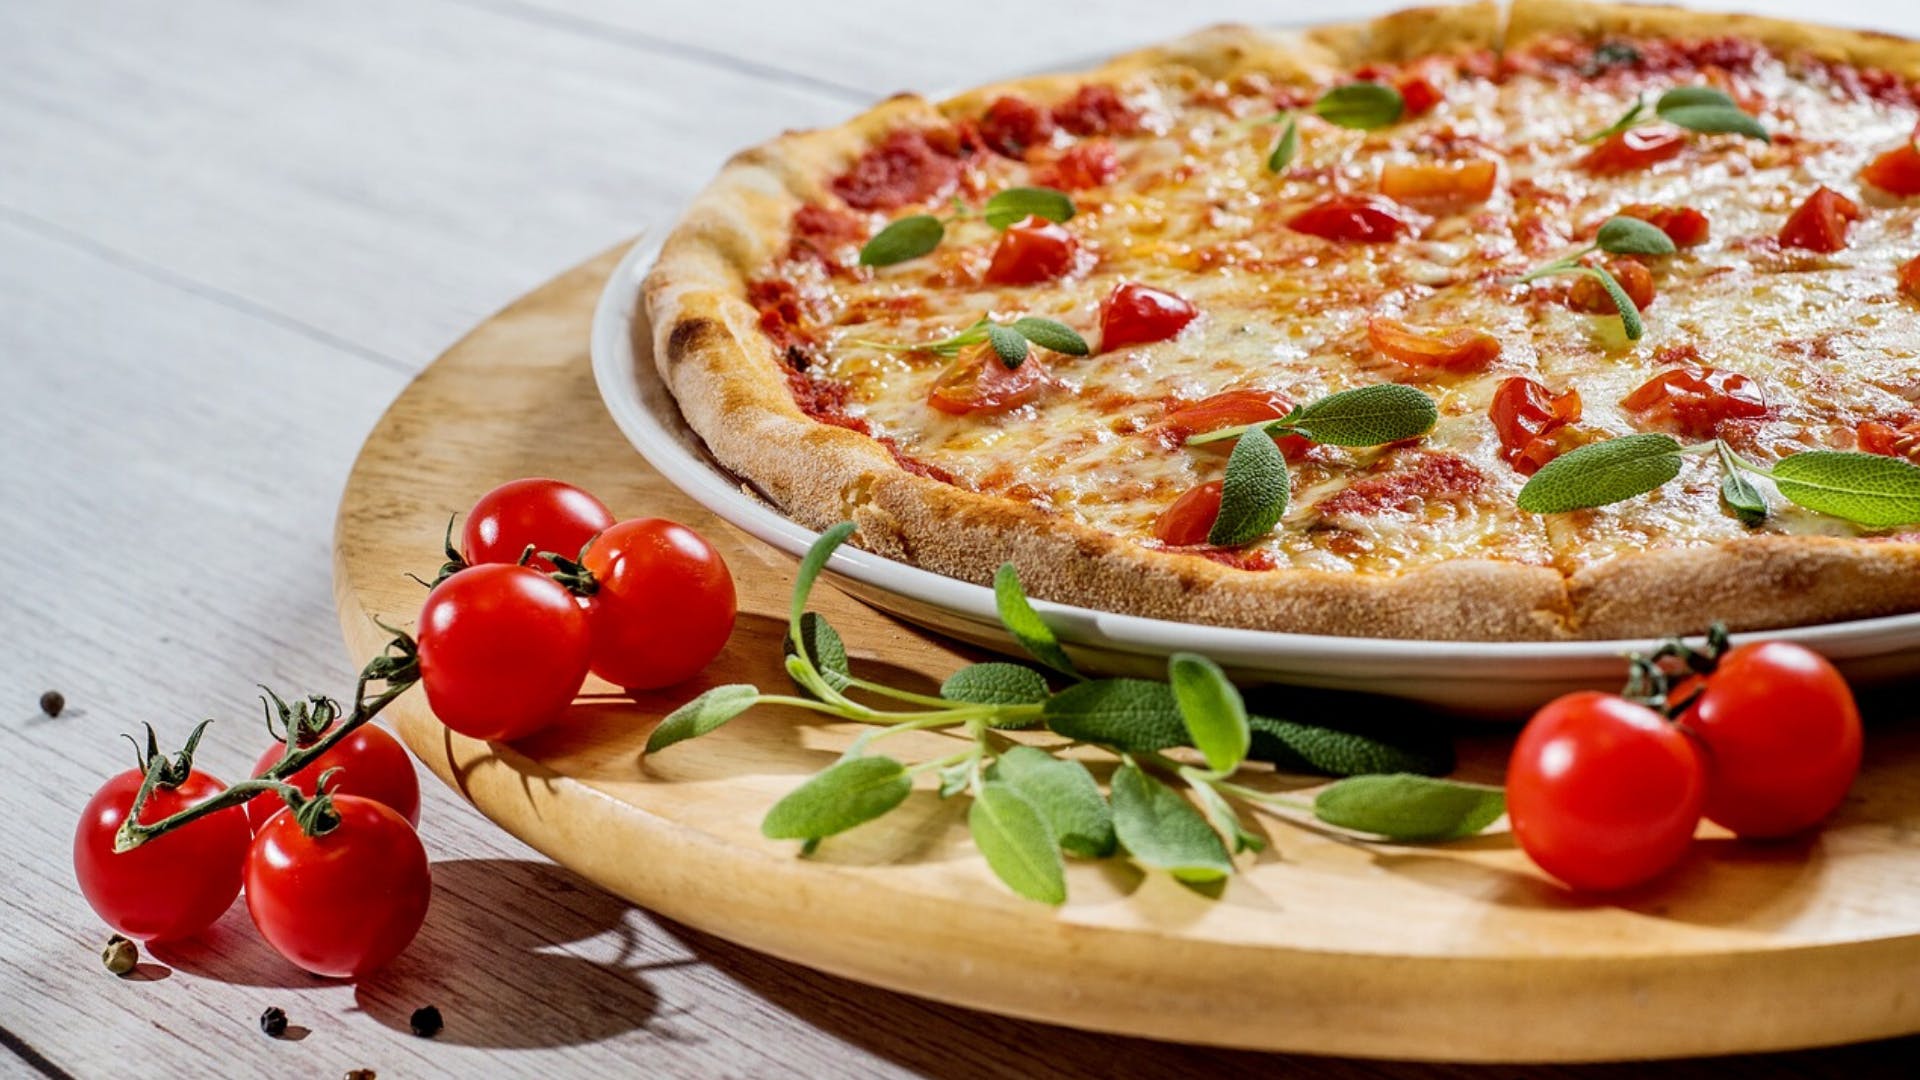 Dish,Food,Cuisine,Ingredient,Pizza,Tarte flambée,Produce,Pizza cheese,Flatbread,Baked goods